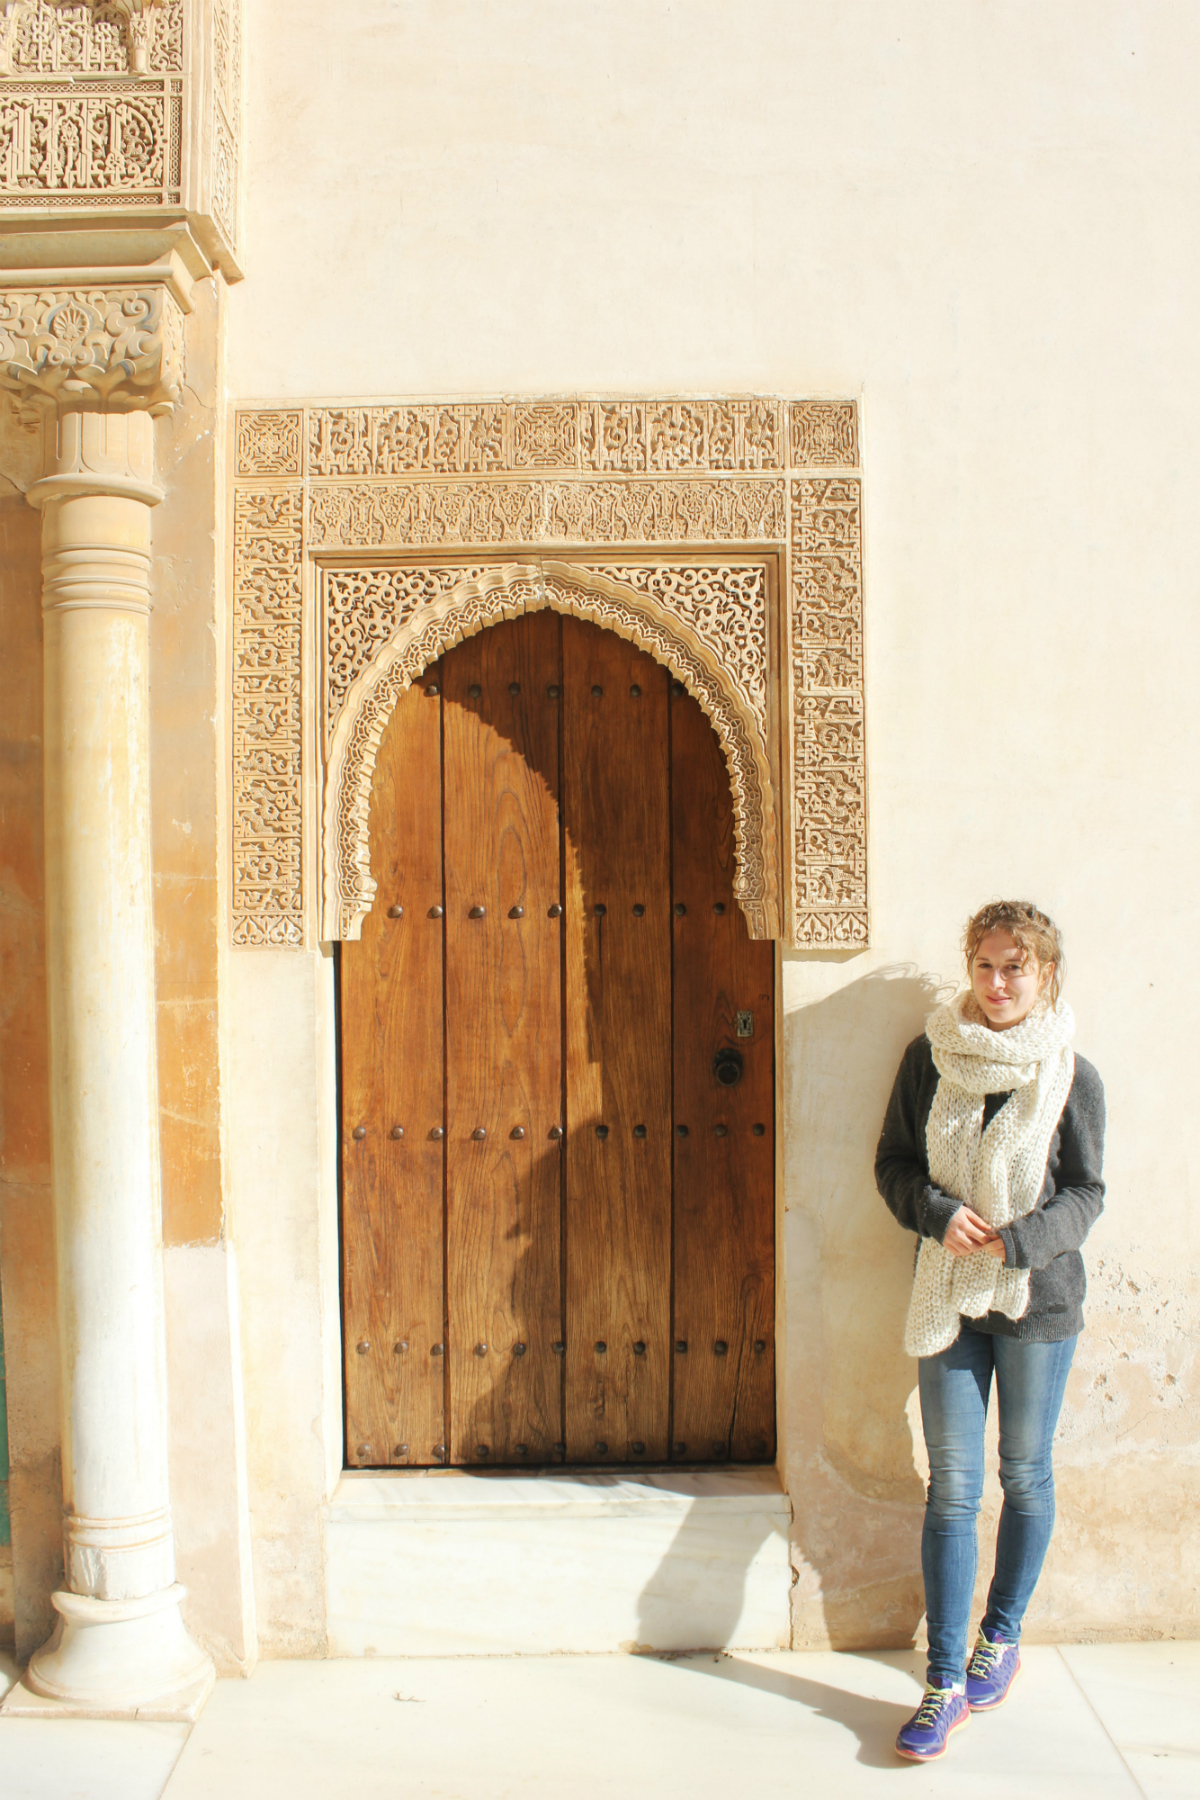 Charlie standing at door Alhambra Granada Spain - Charlie on Travel 1200